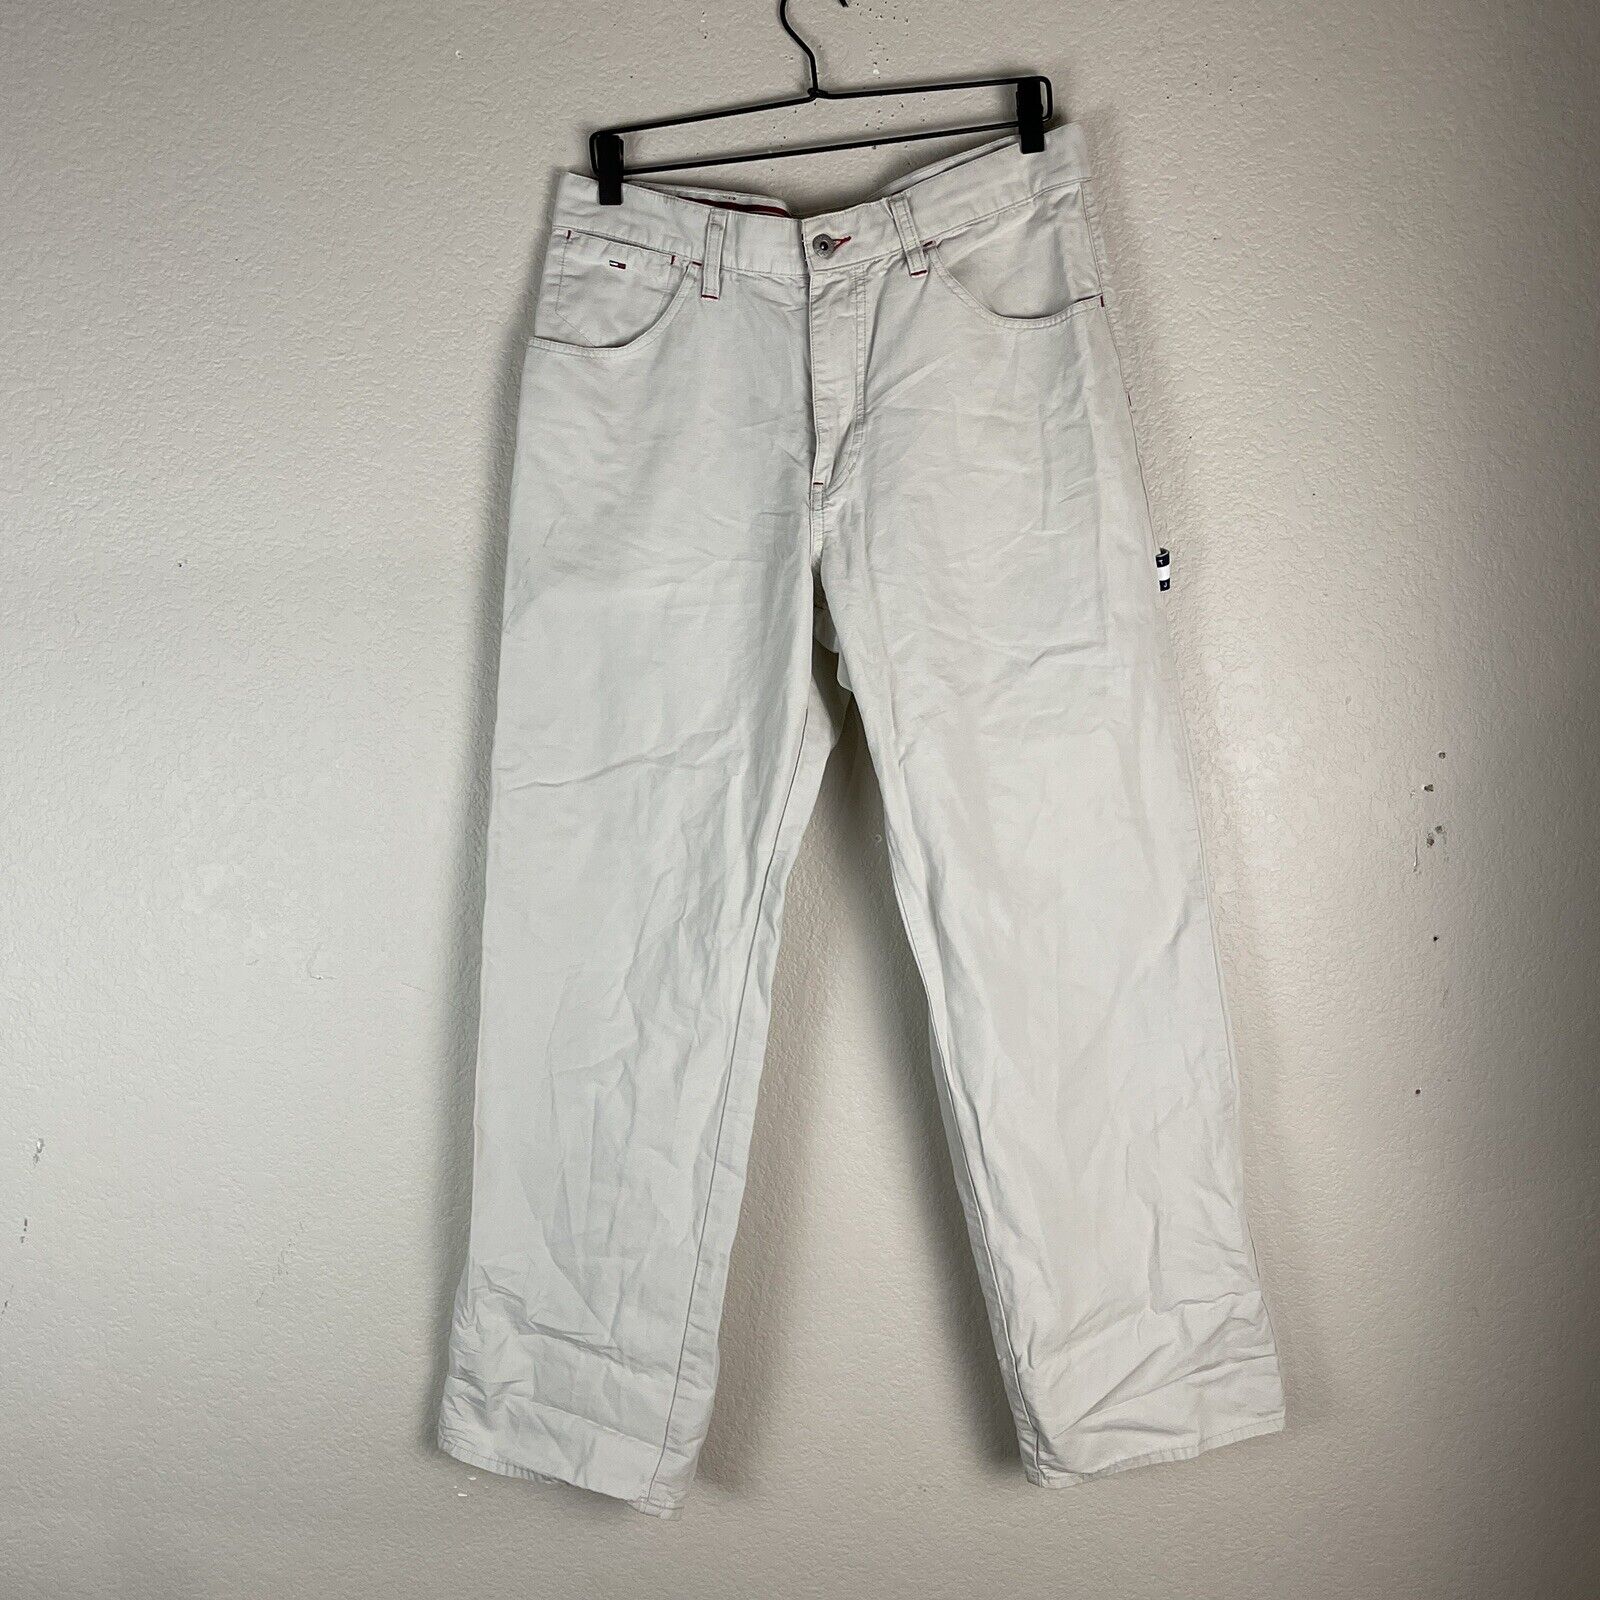 Vintage Tommy Hilfiger Pants Size 33X32